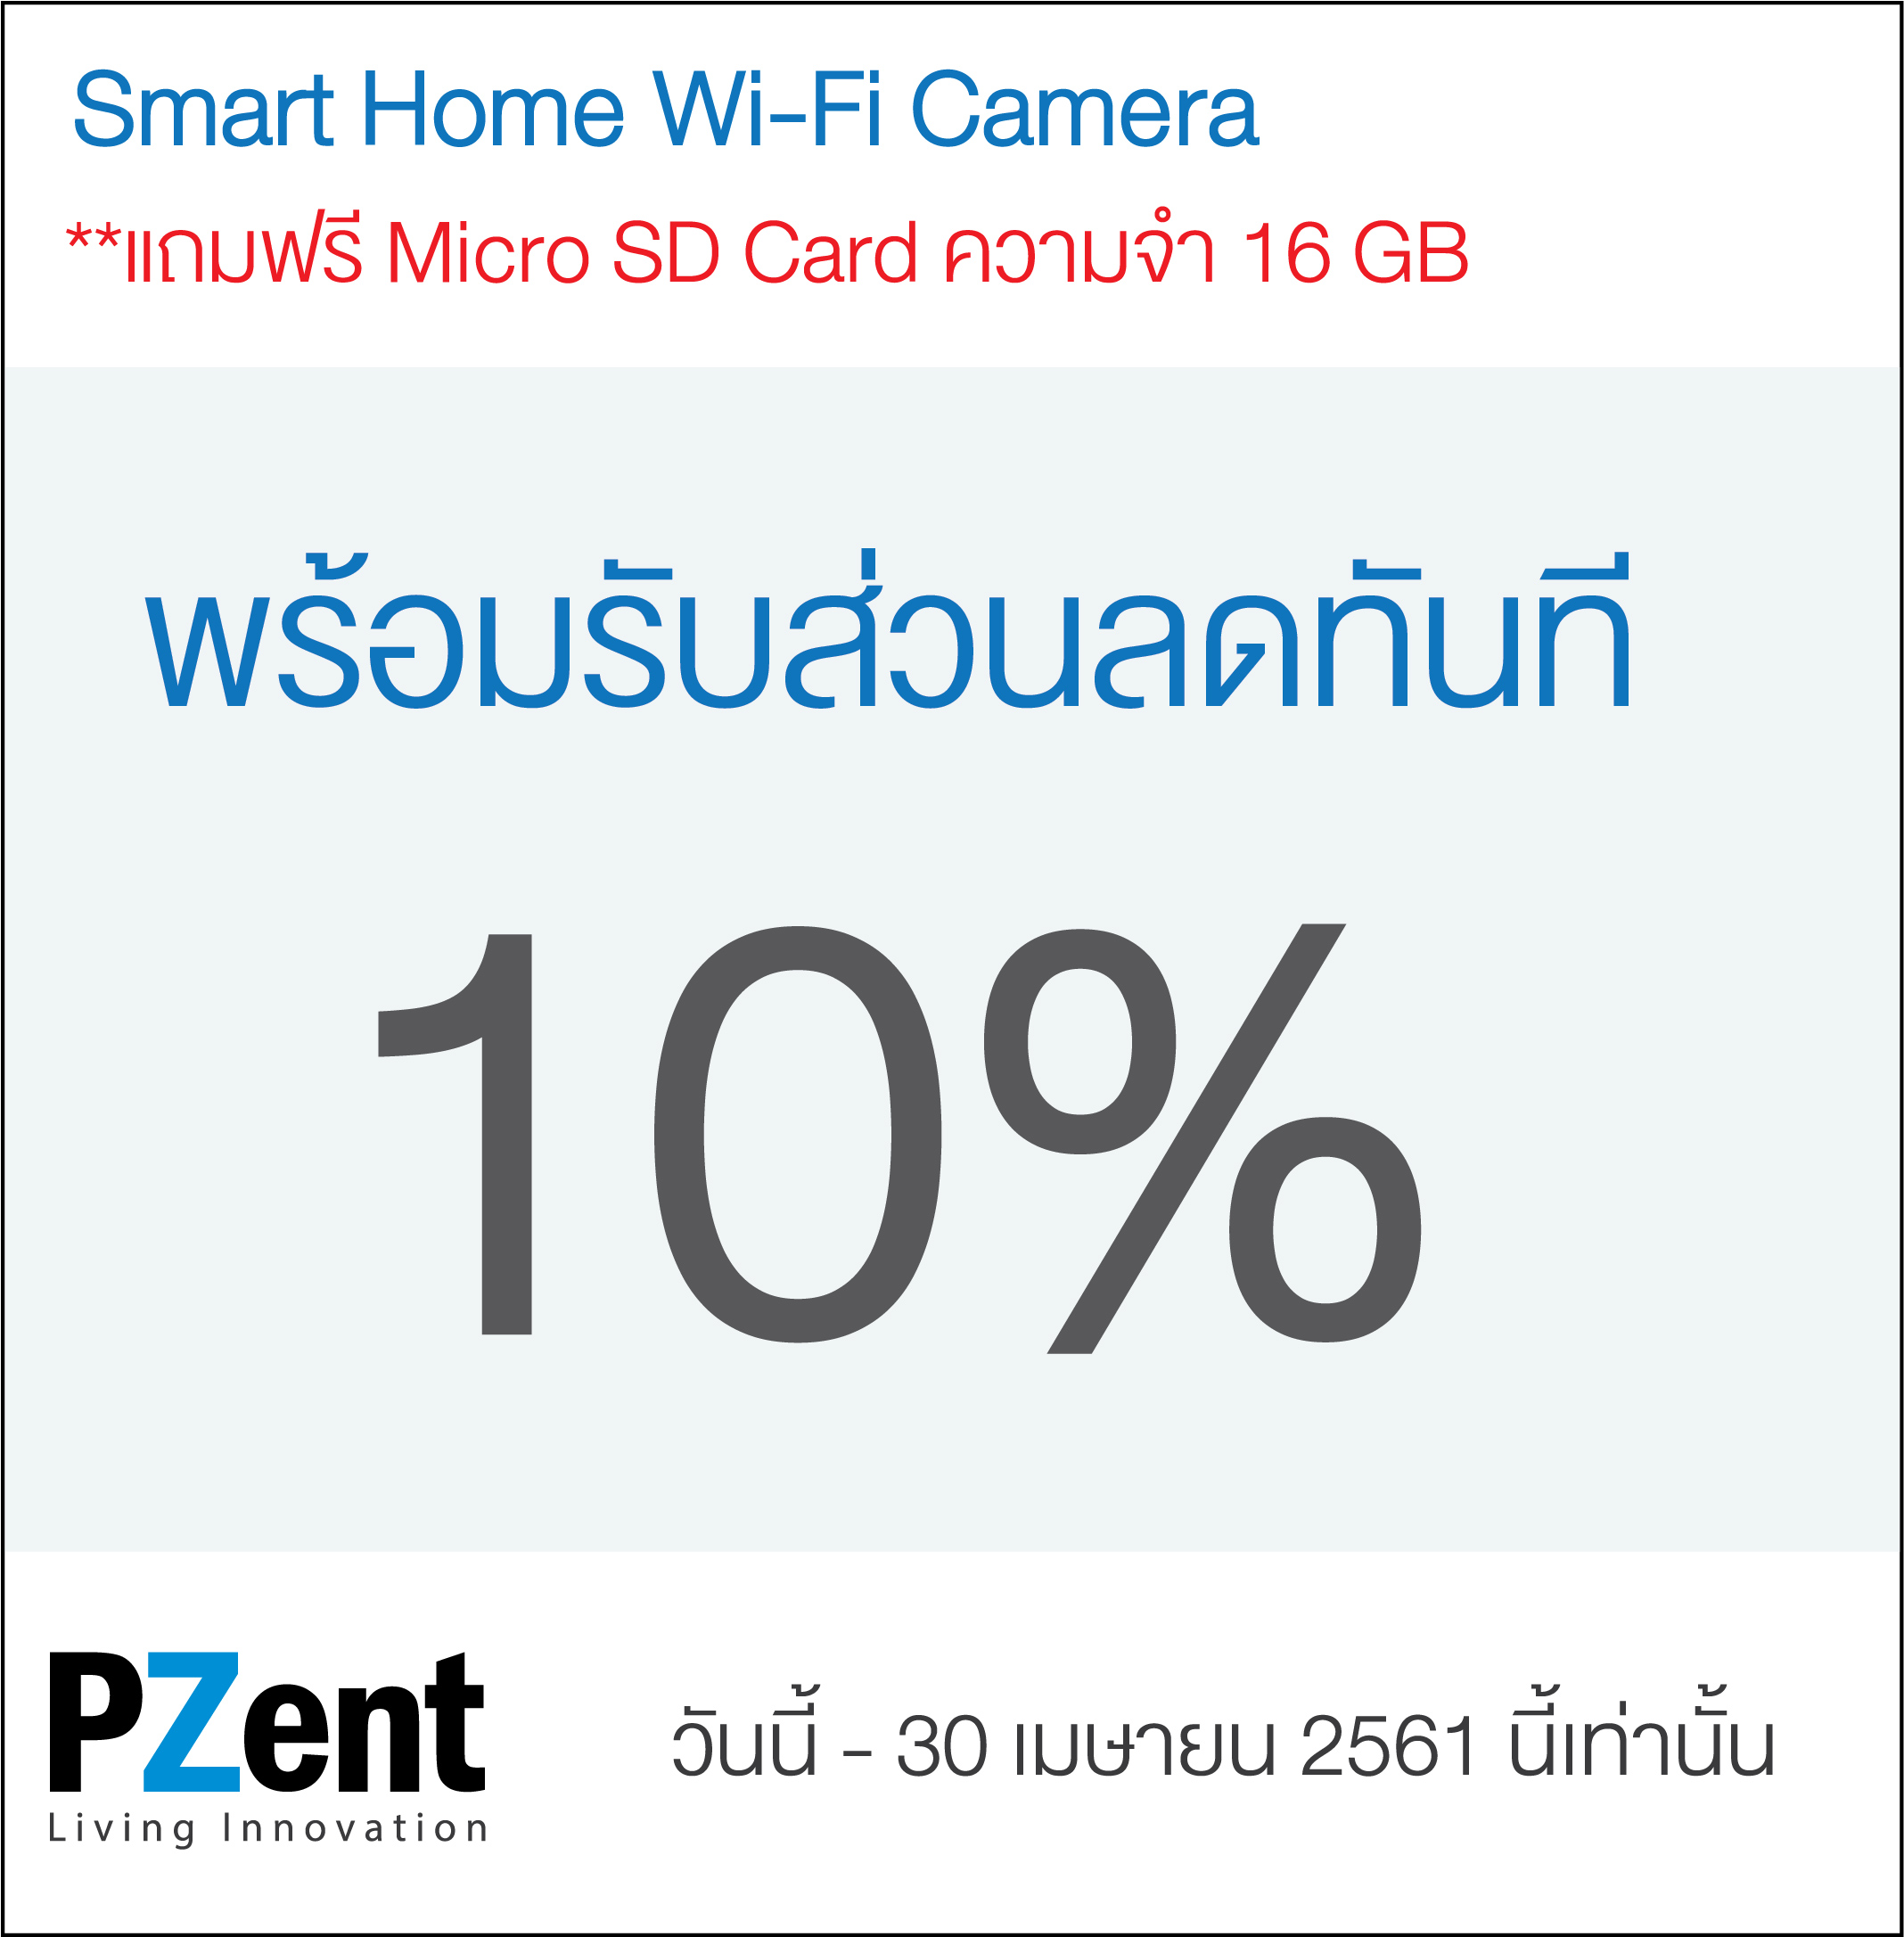 PZent ต้อนรับซัมเมอร์ ฝากบ้านไว้กับ Smart Home Wi-Fi Camera